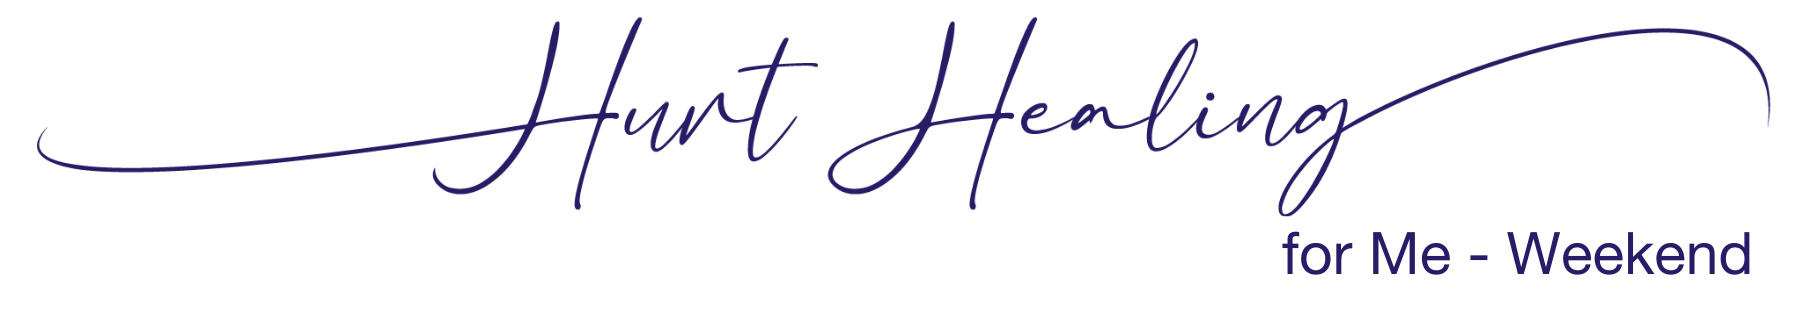 Logo-HH4ME-Weekend